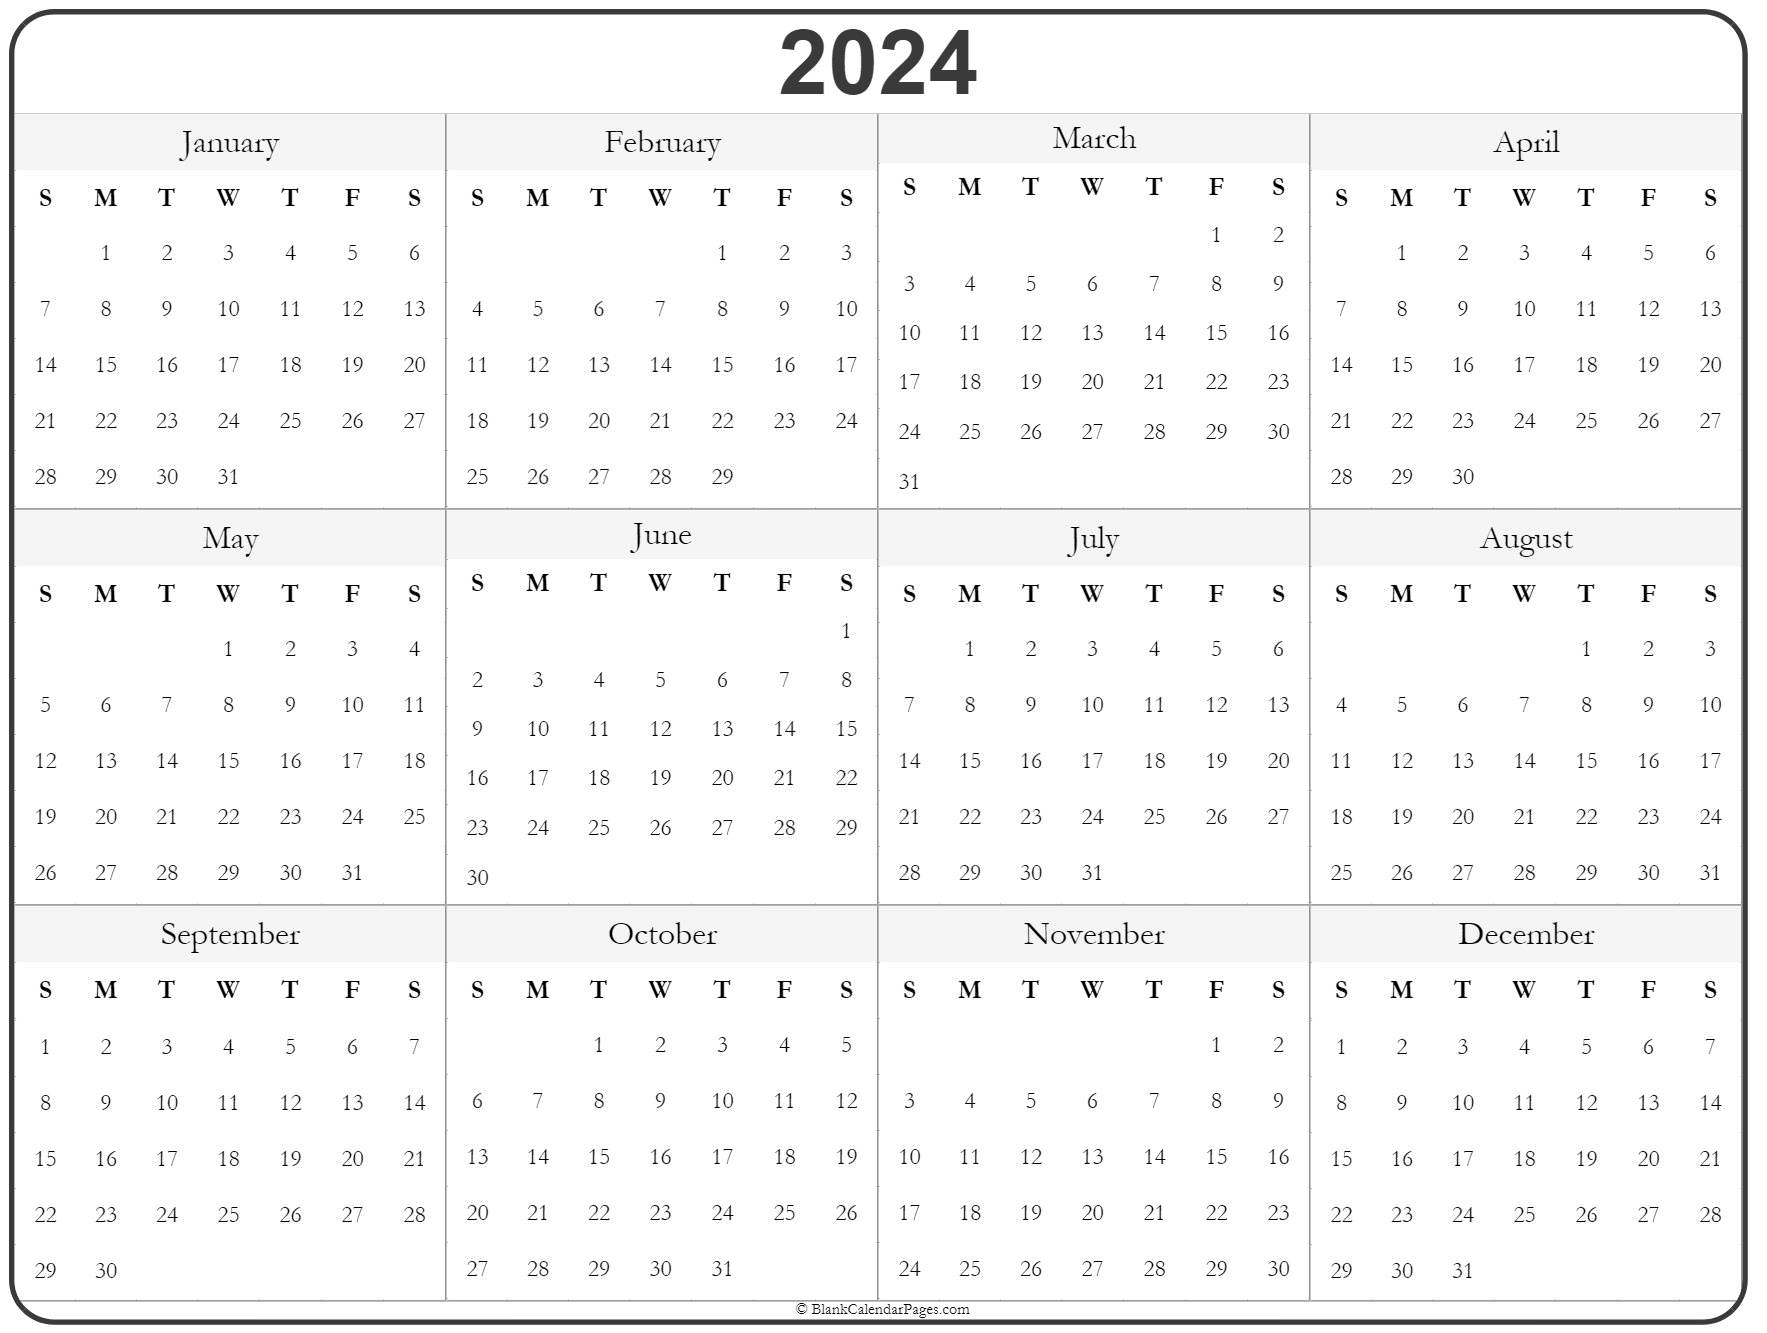 2023 2024 Two Year Calendar Free Printable Pdf Templates Calendar - Free Printable 2 Year Calendar 2024 To 2025